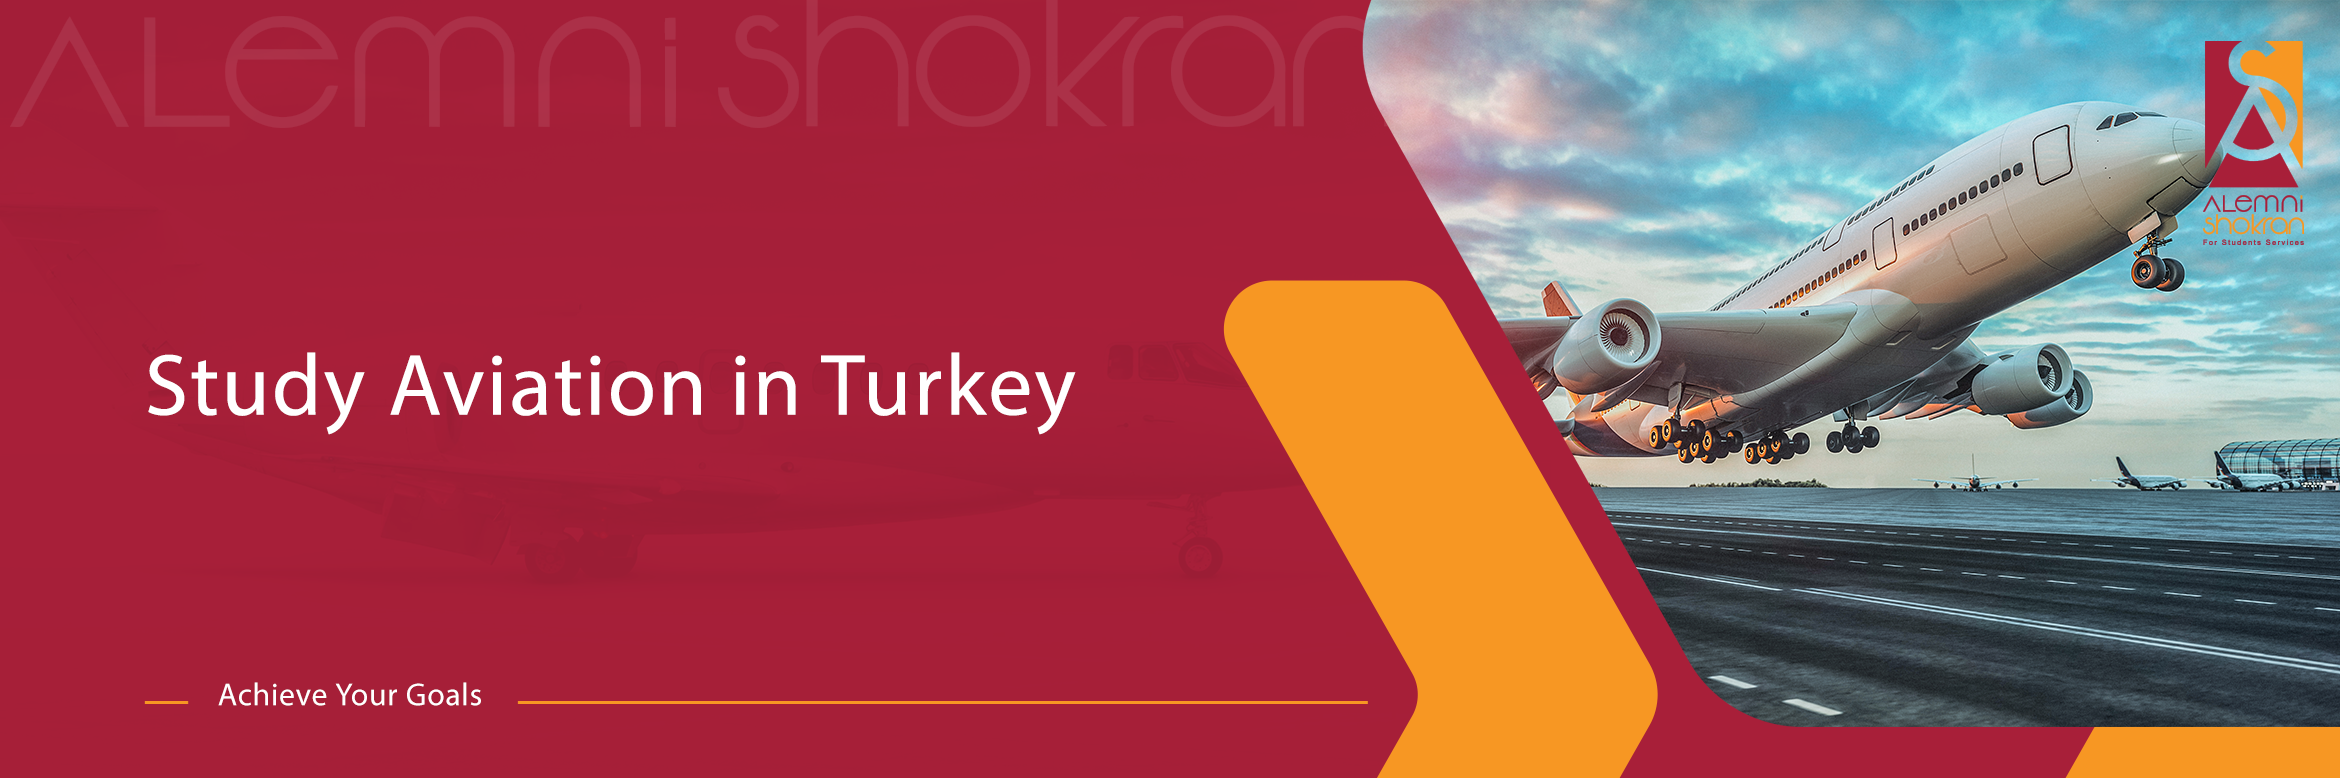 Study Aviation in Turkey